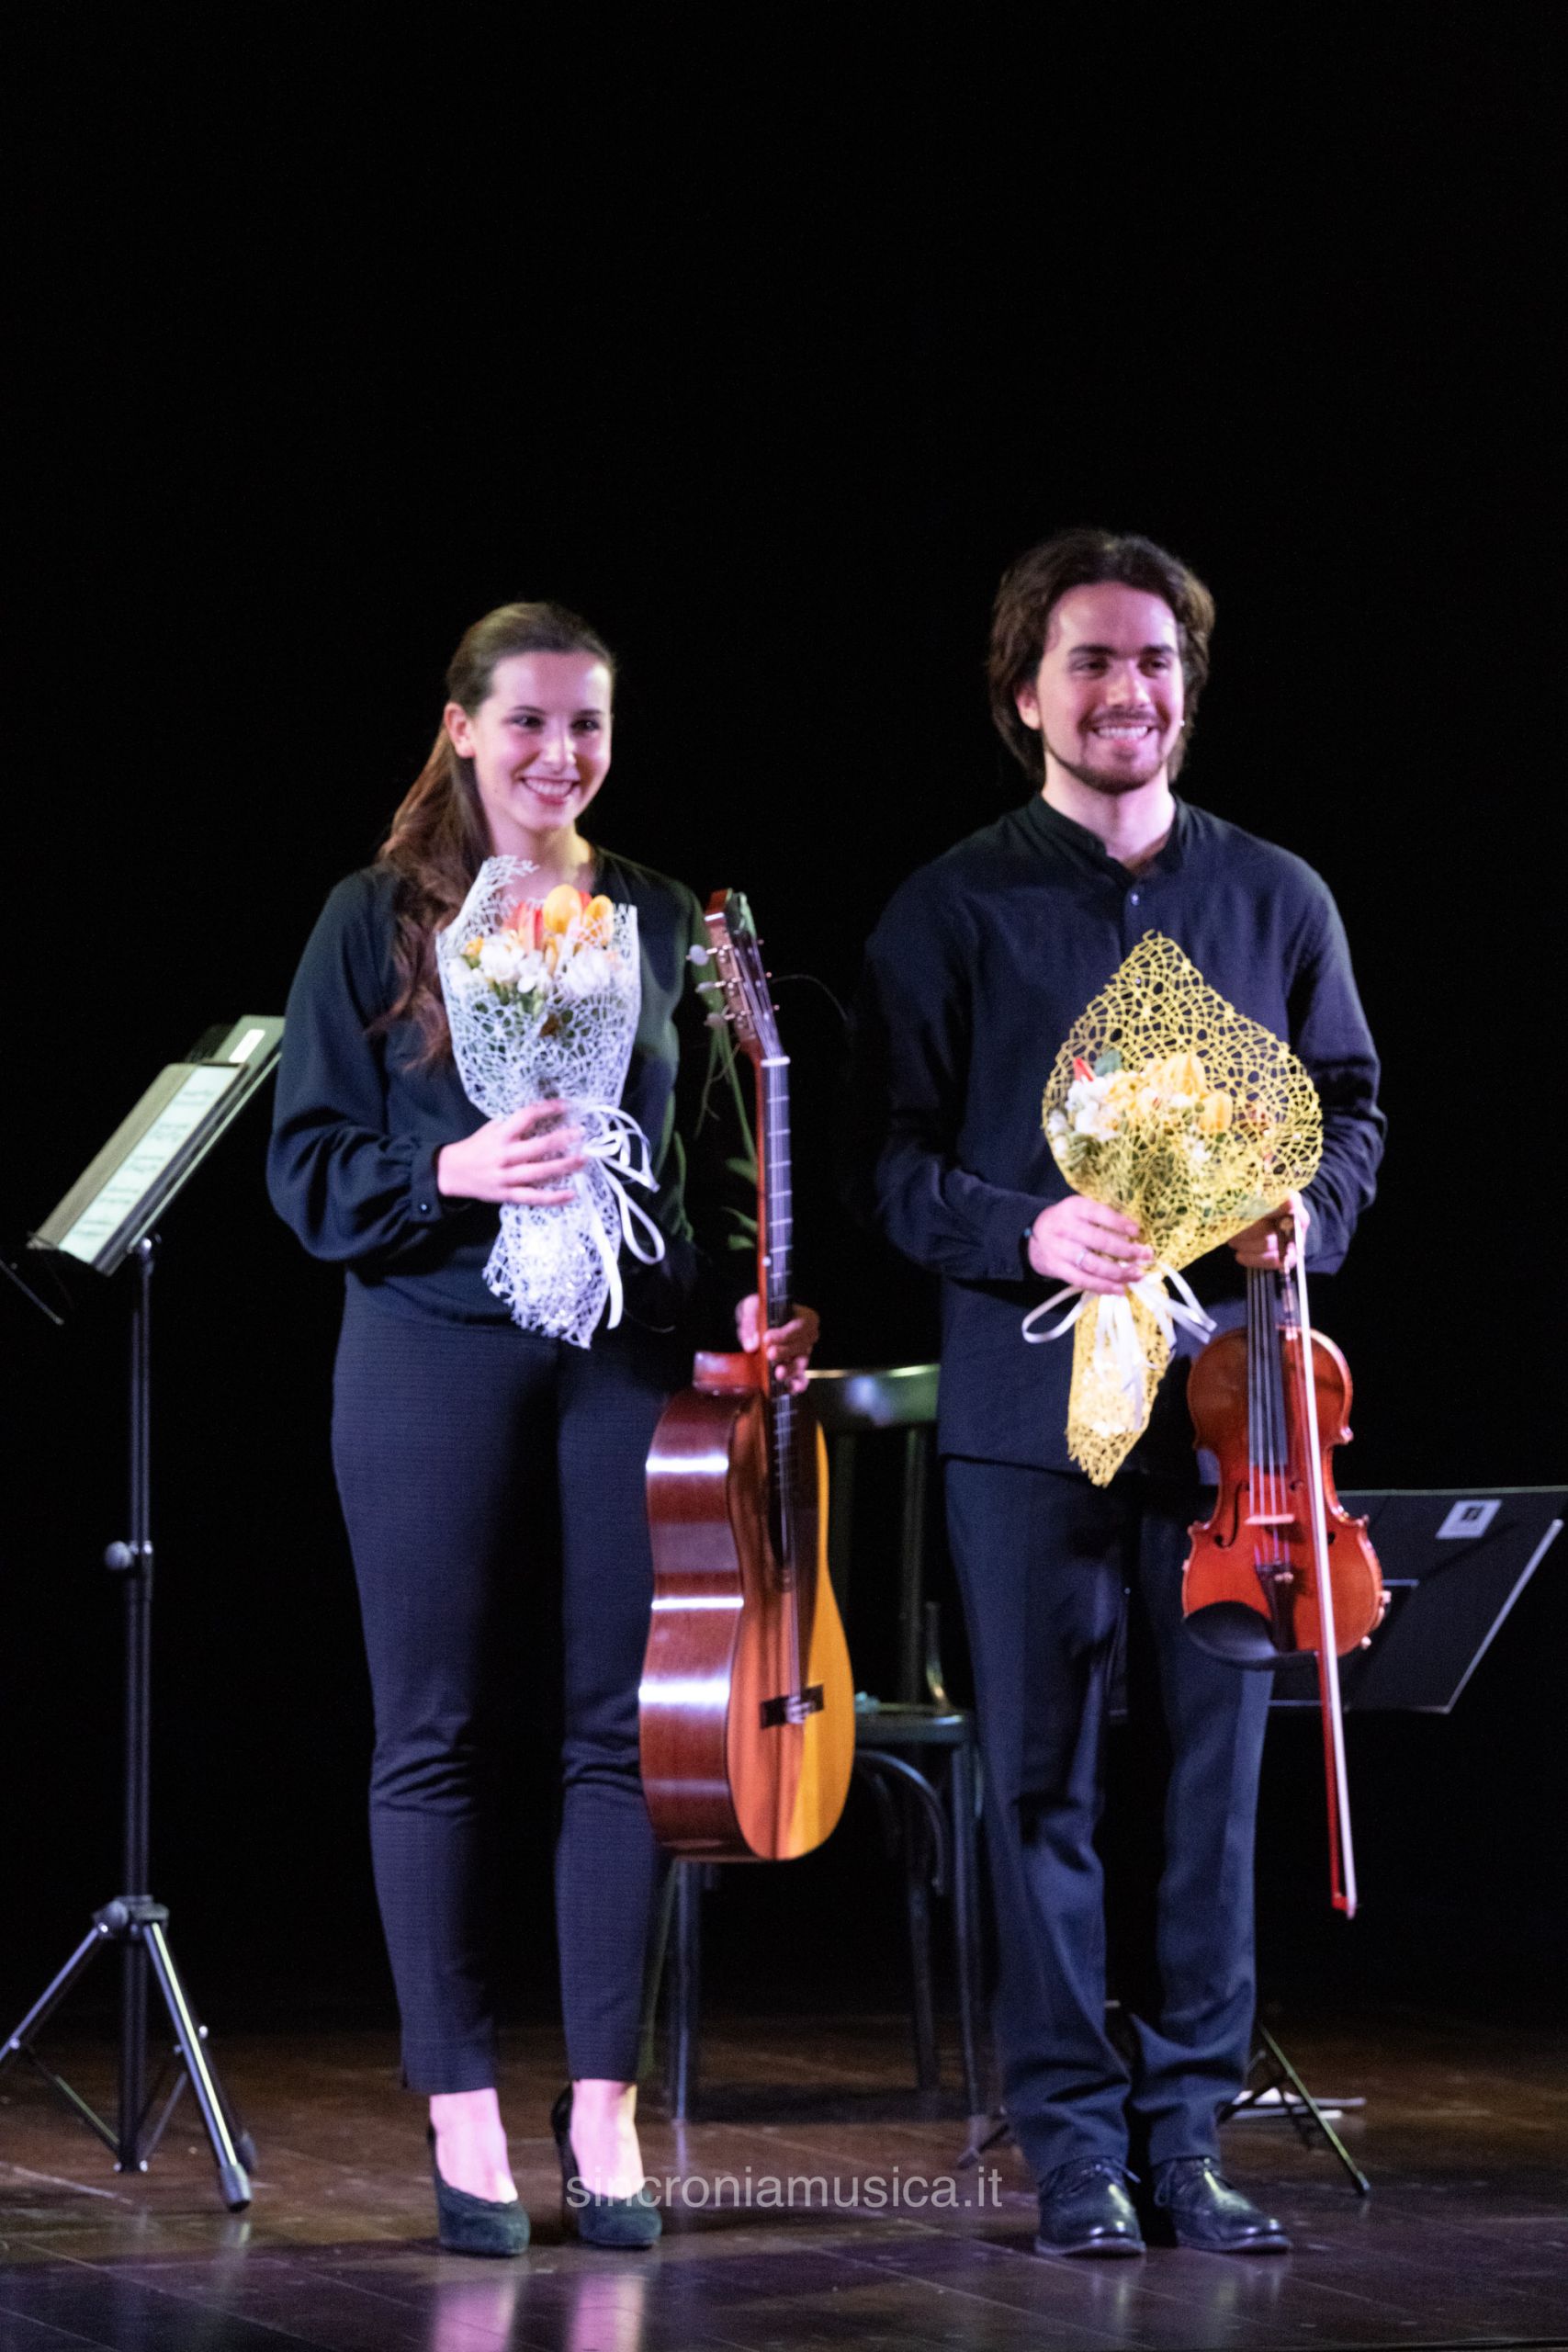 Rassegna Concertistica Sincronìa 2021/22 – Gibboni Giuseppe e Carlotta Dalia